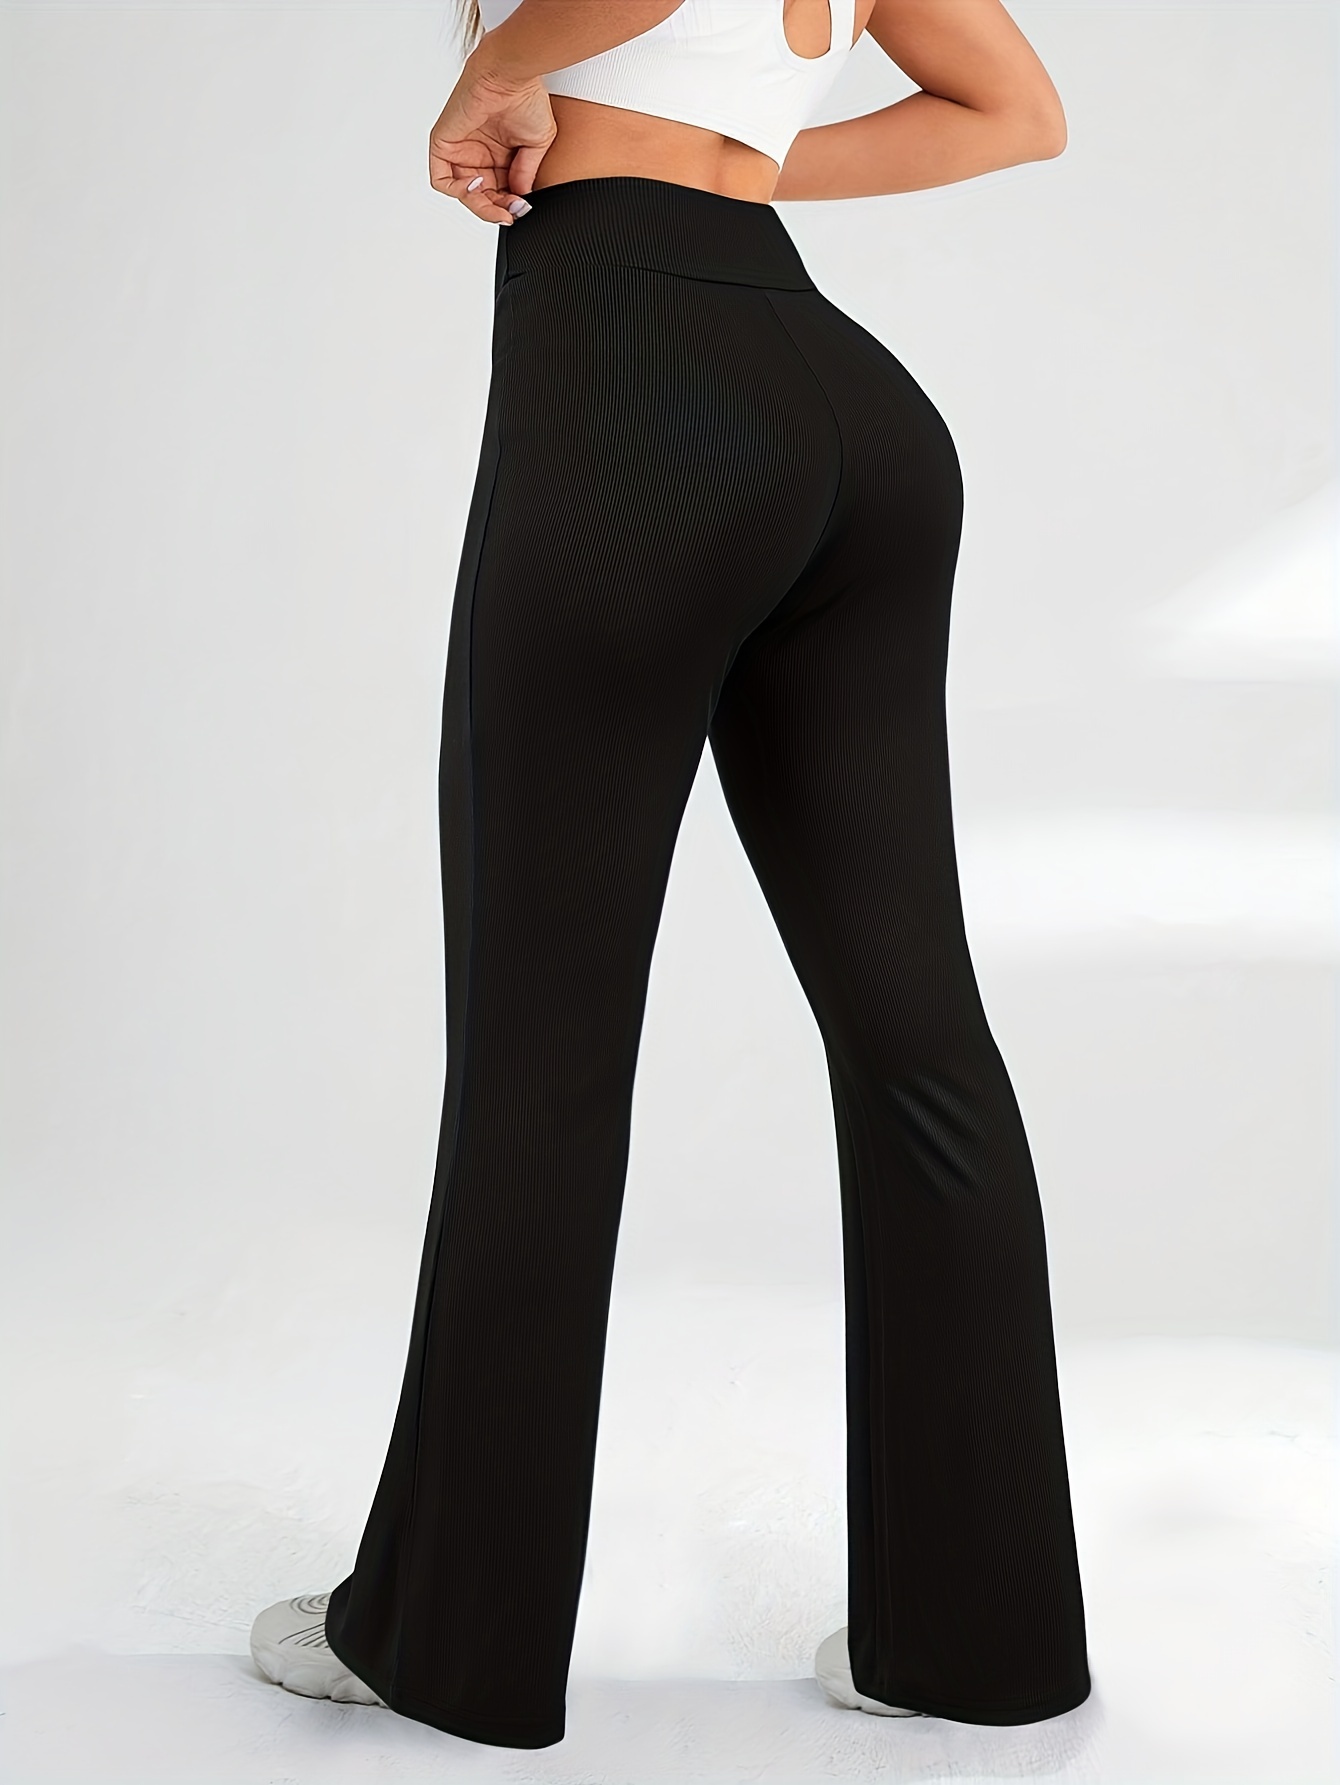  summer leggings for women black palazzo pants for